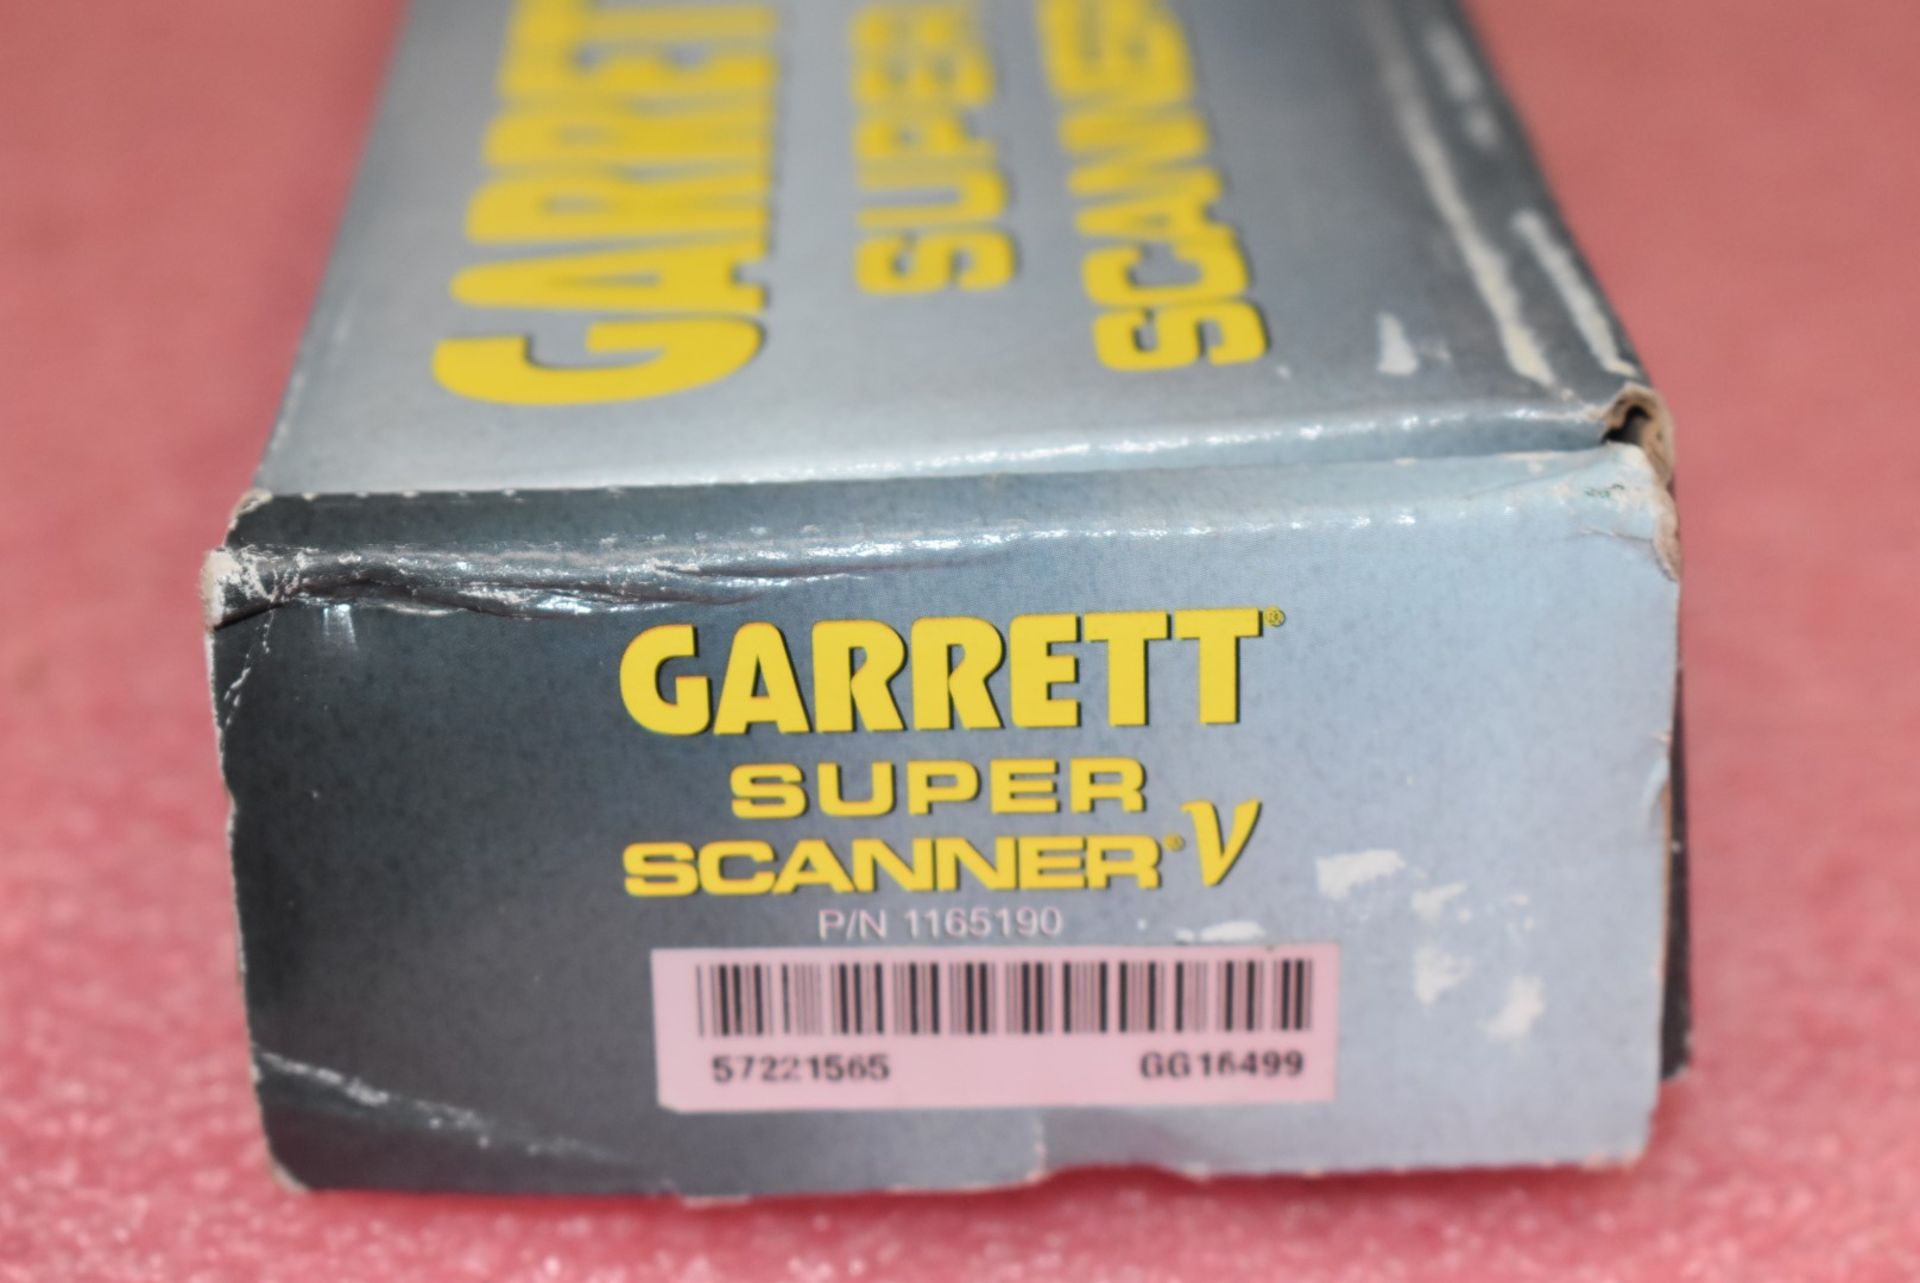 1 x Garrett Super Scanner V Vibrating Audible Hand Held Metal Detector - Unused With Original - Image 6 of 9